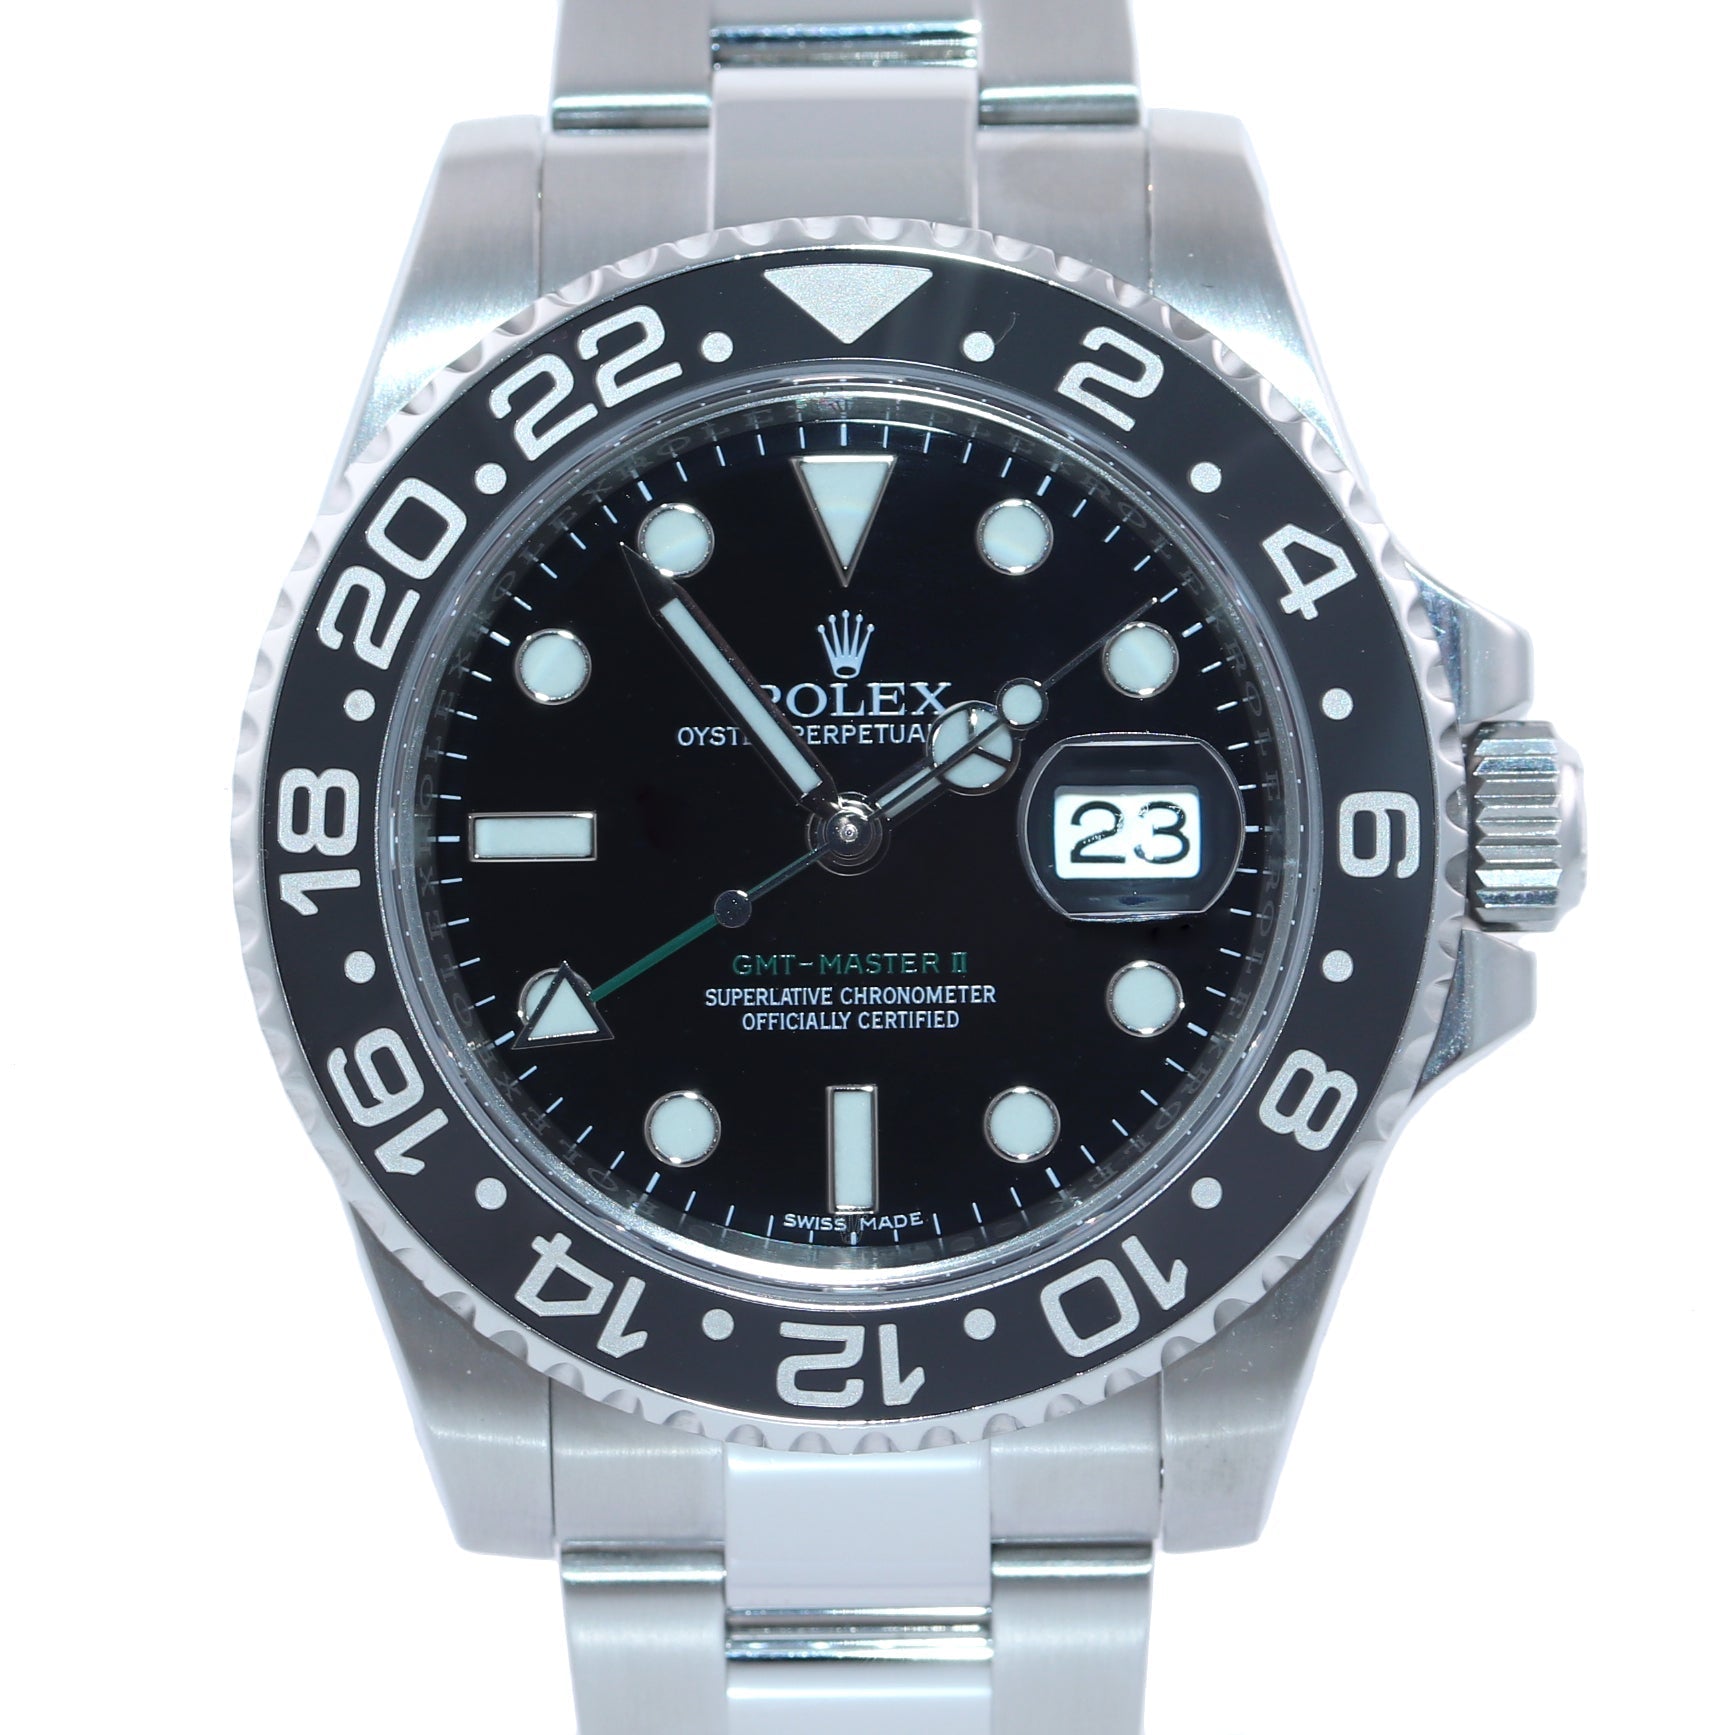 2018 DISCONTINUED Rolex GMT Master II 116710 Steel Ceramic Black Watch Box